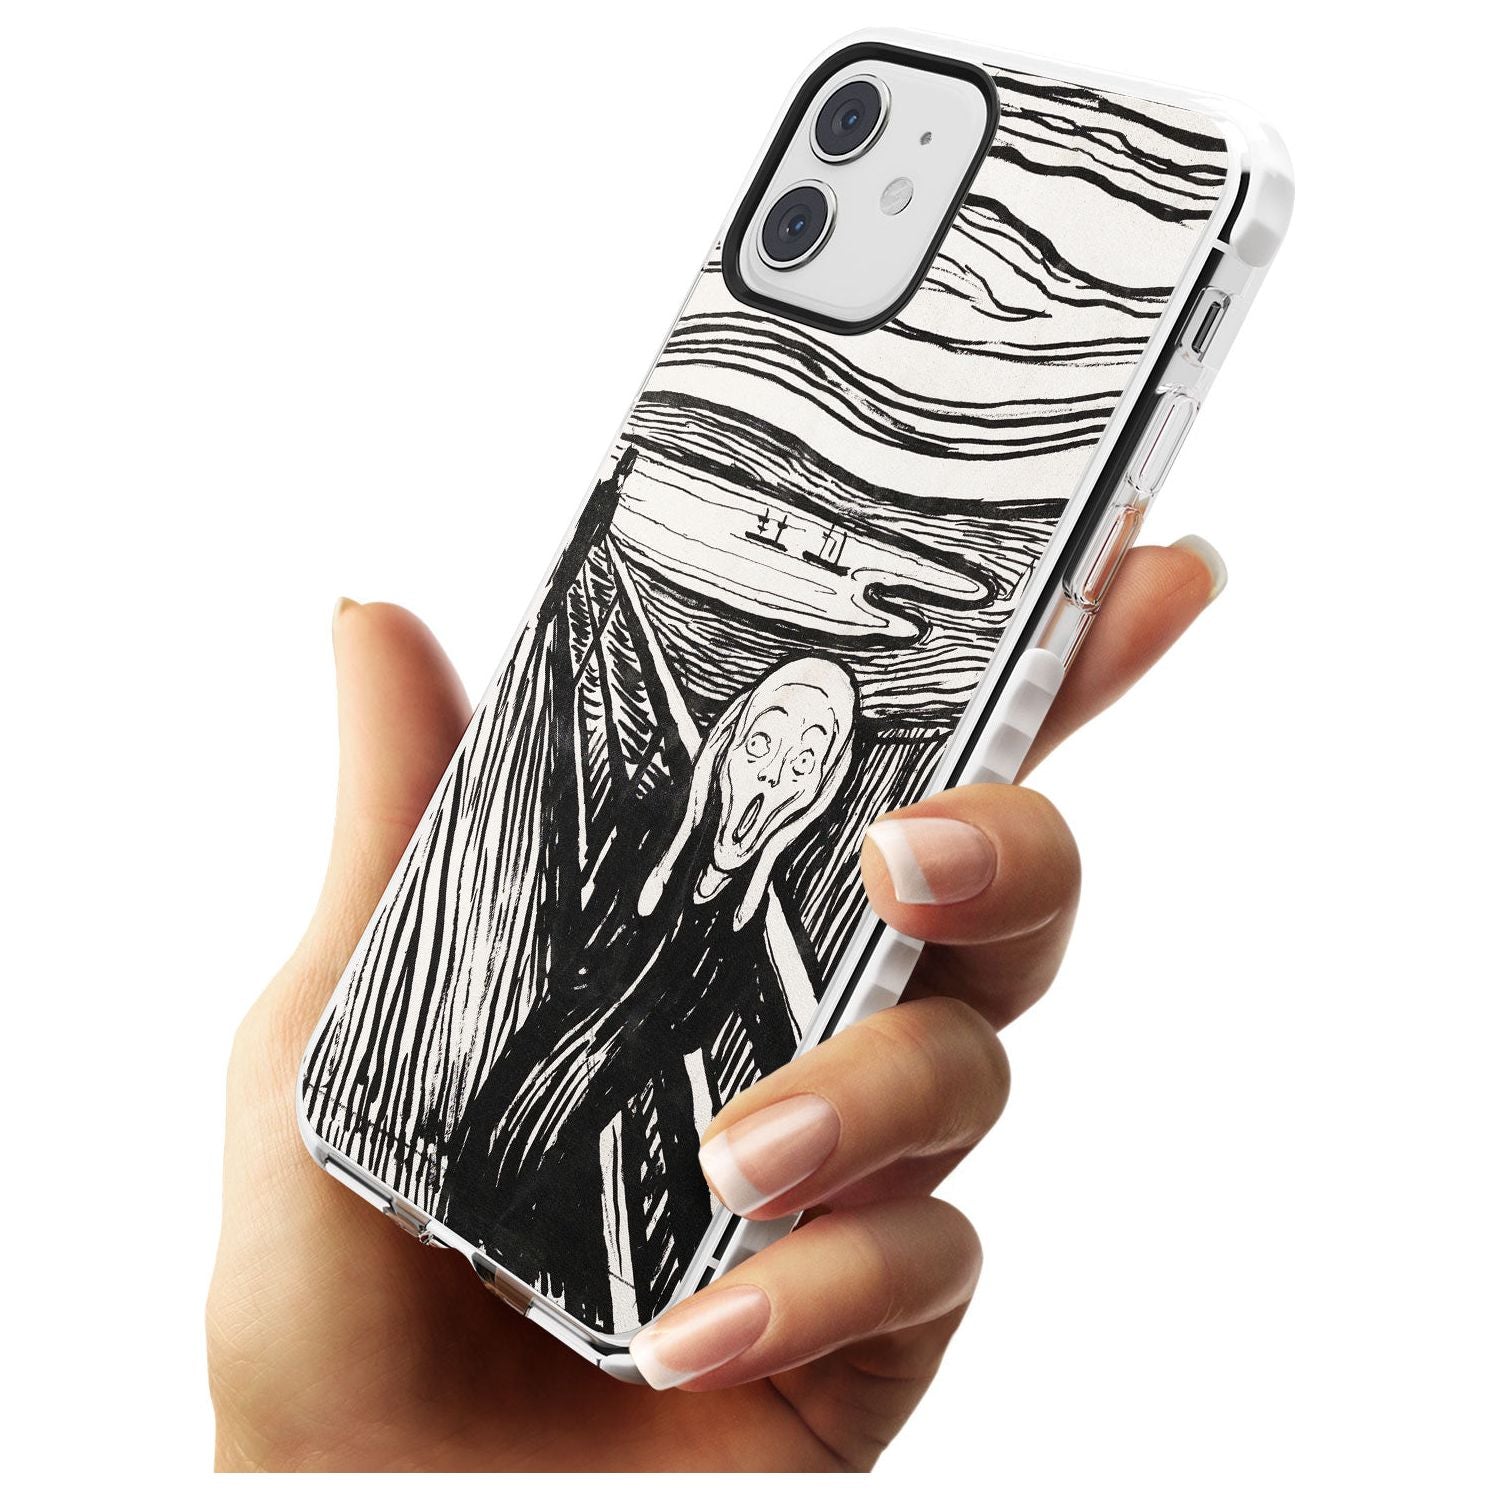 The Scream Impact Phone Case for iPhone 11